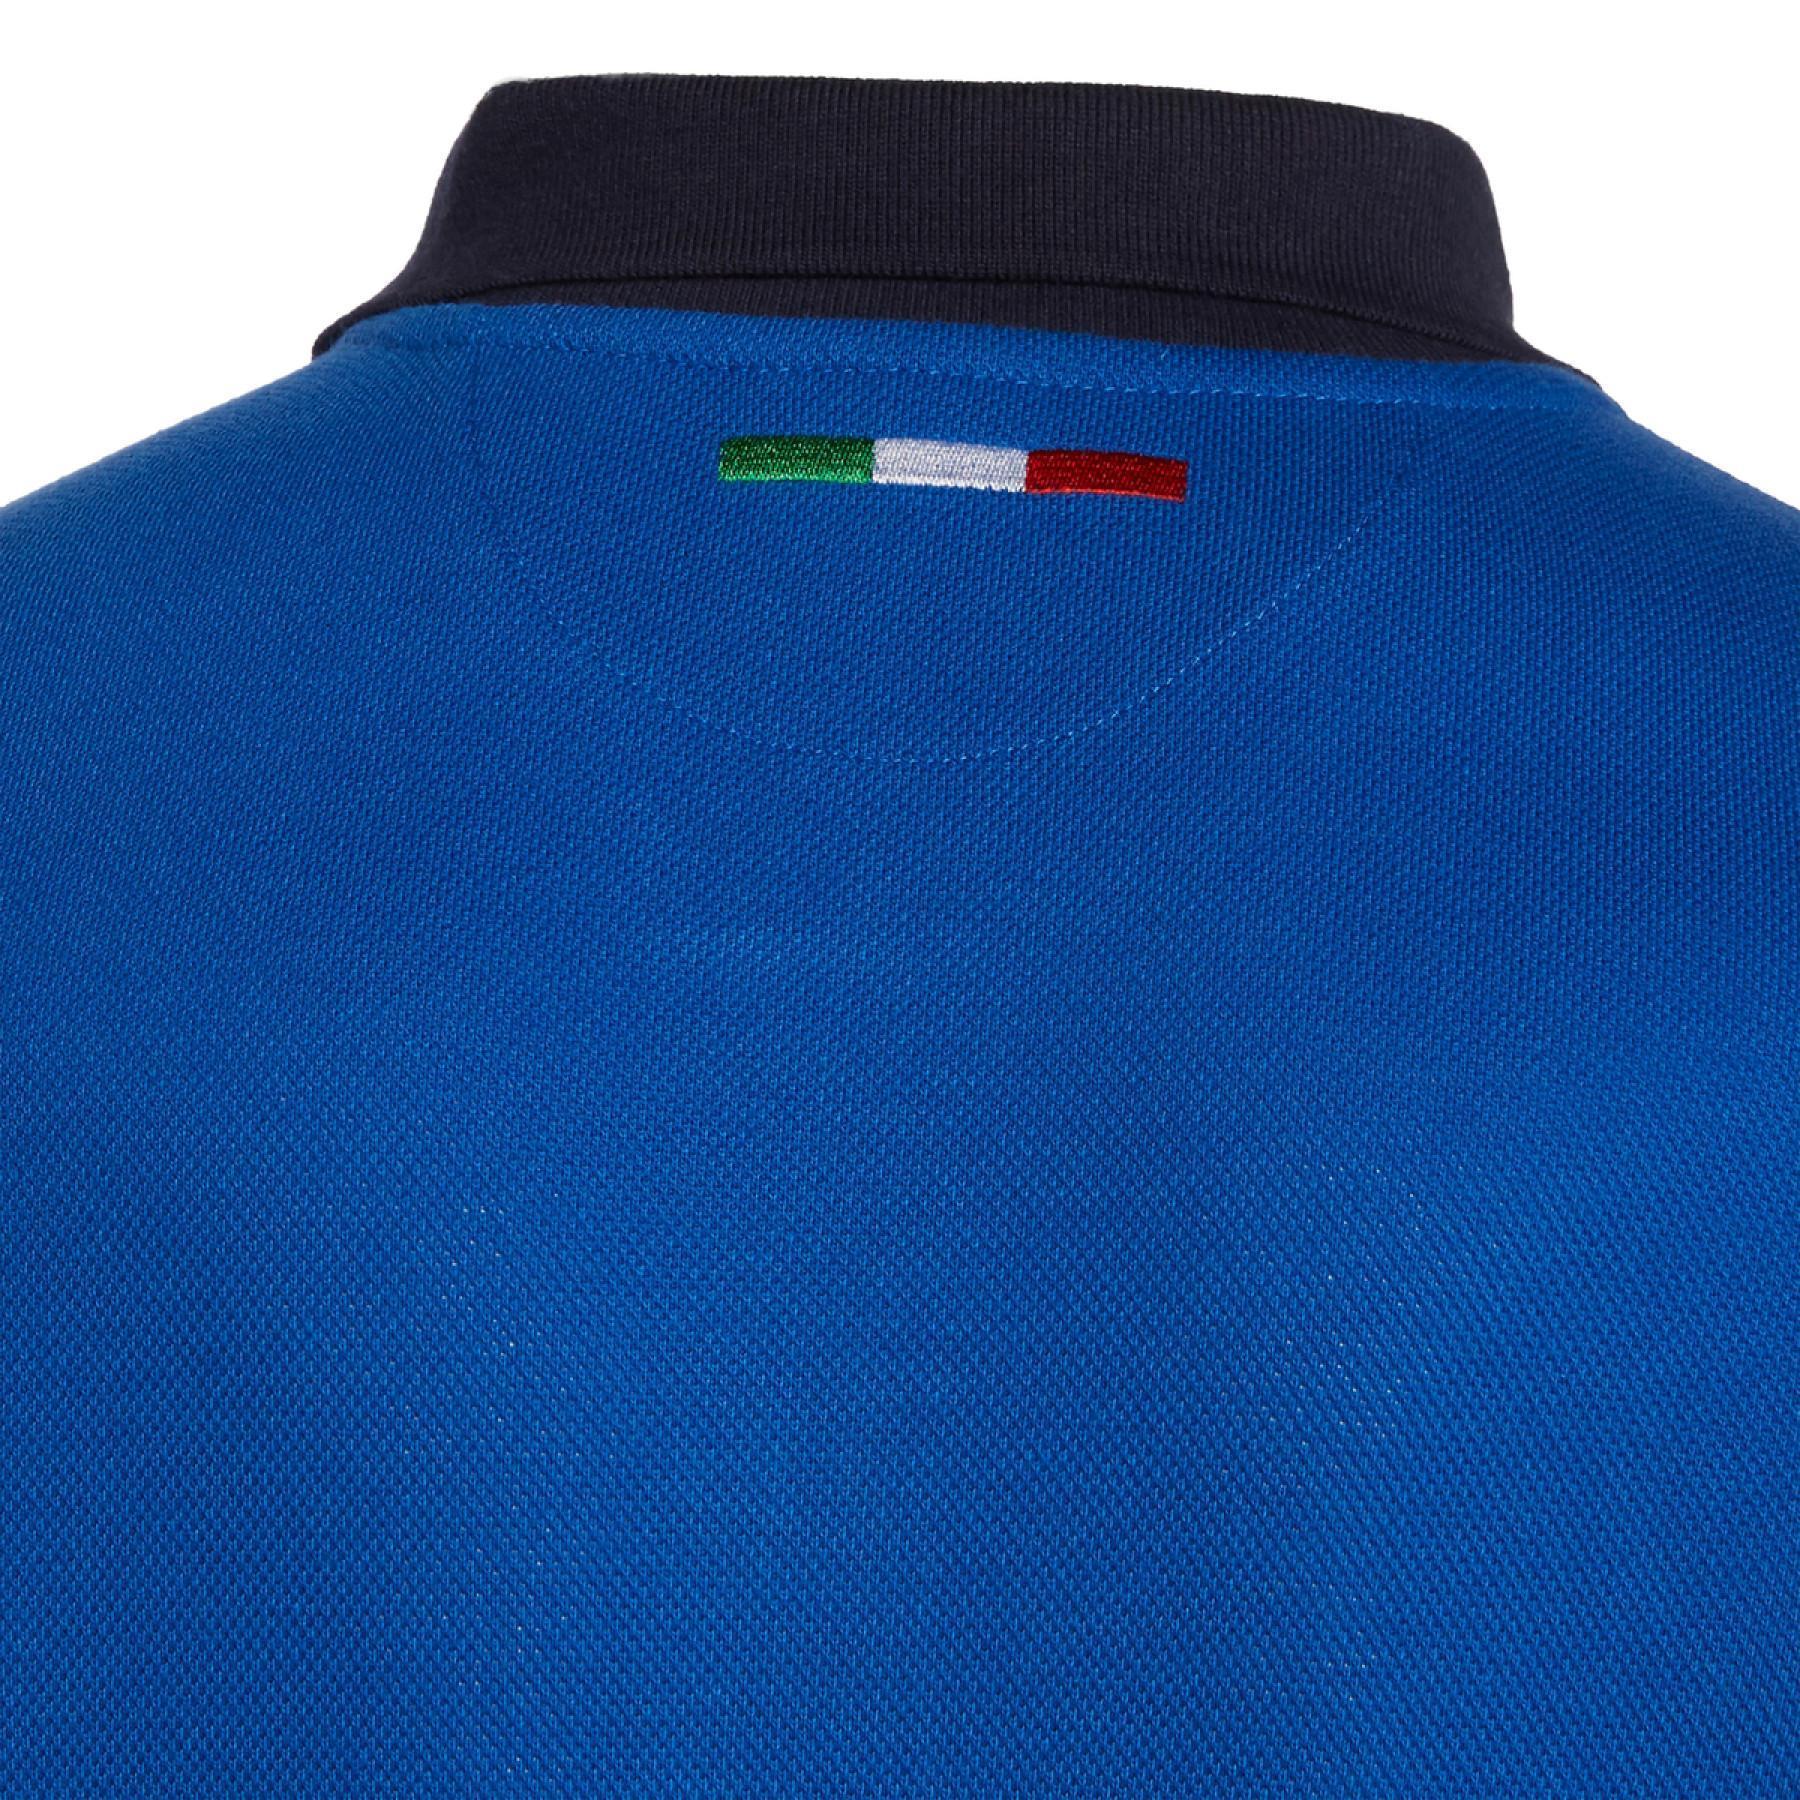 Camisa pólo piqué de algodão Italie rugby 2019